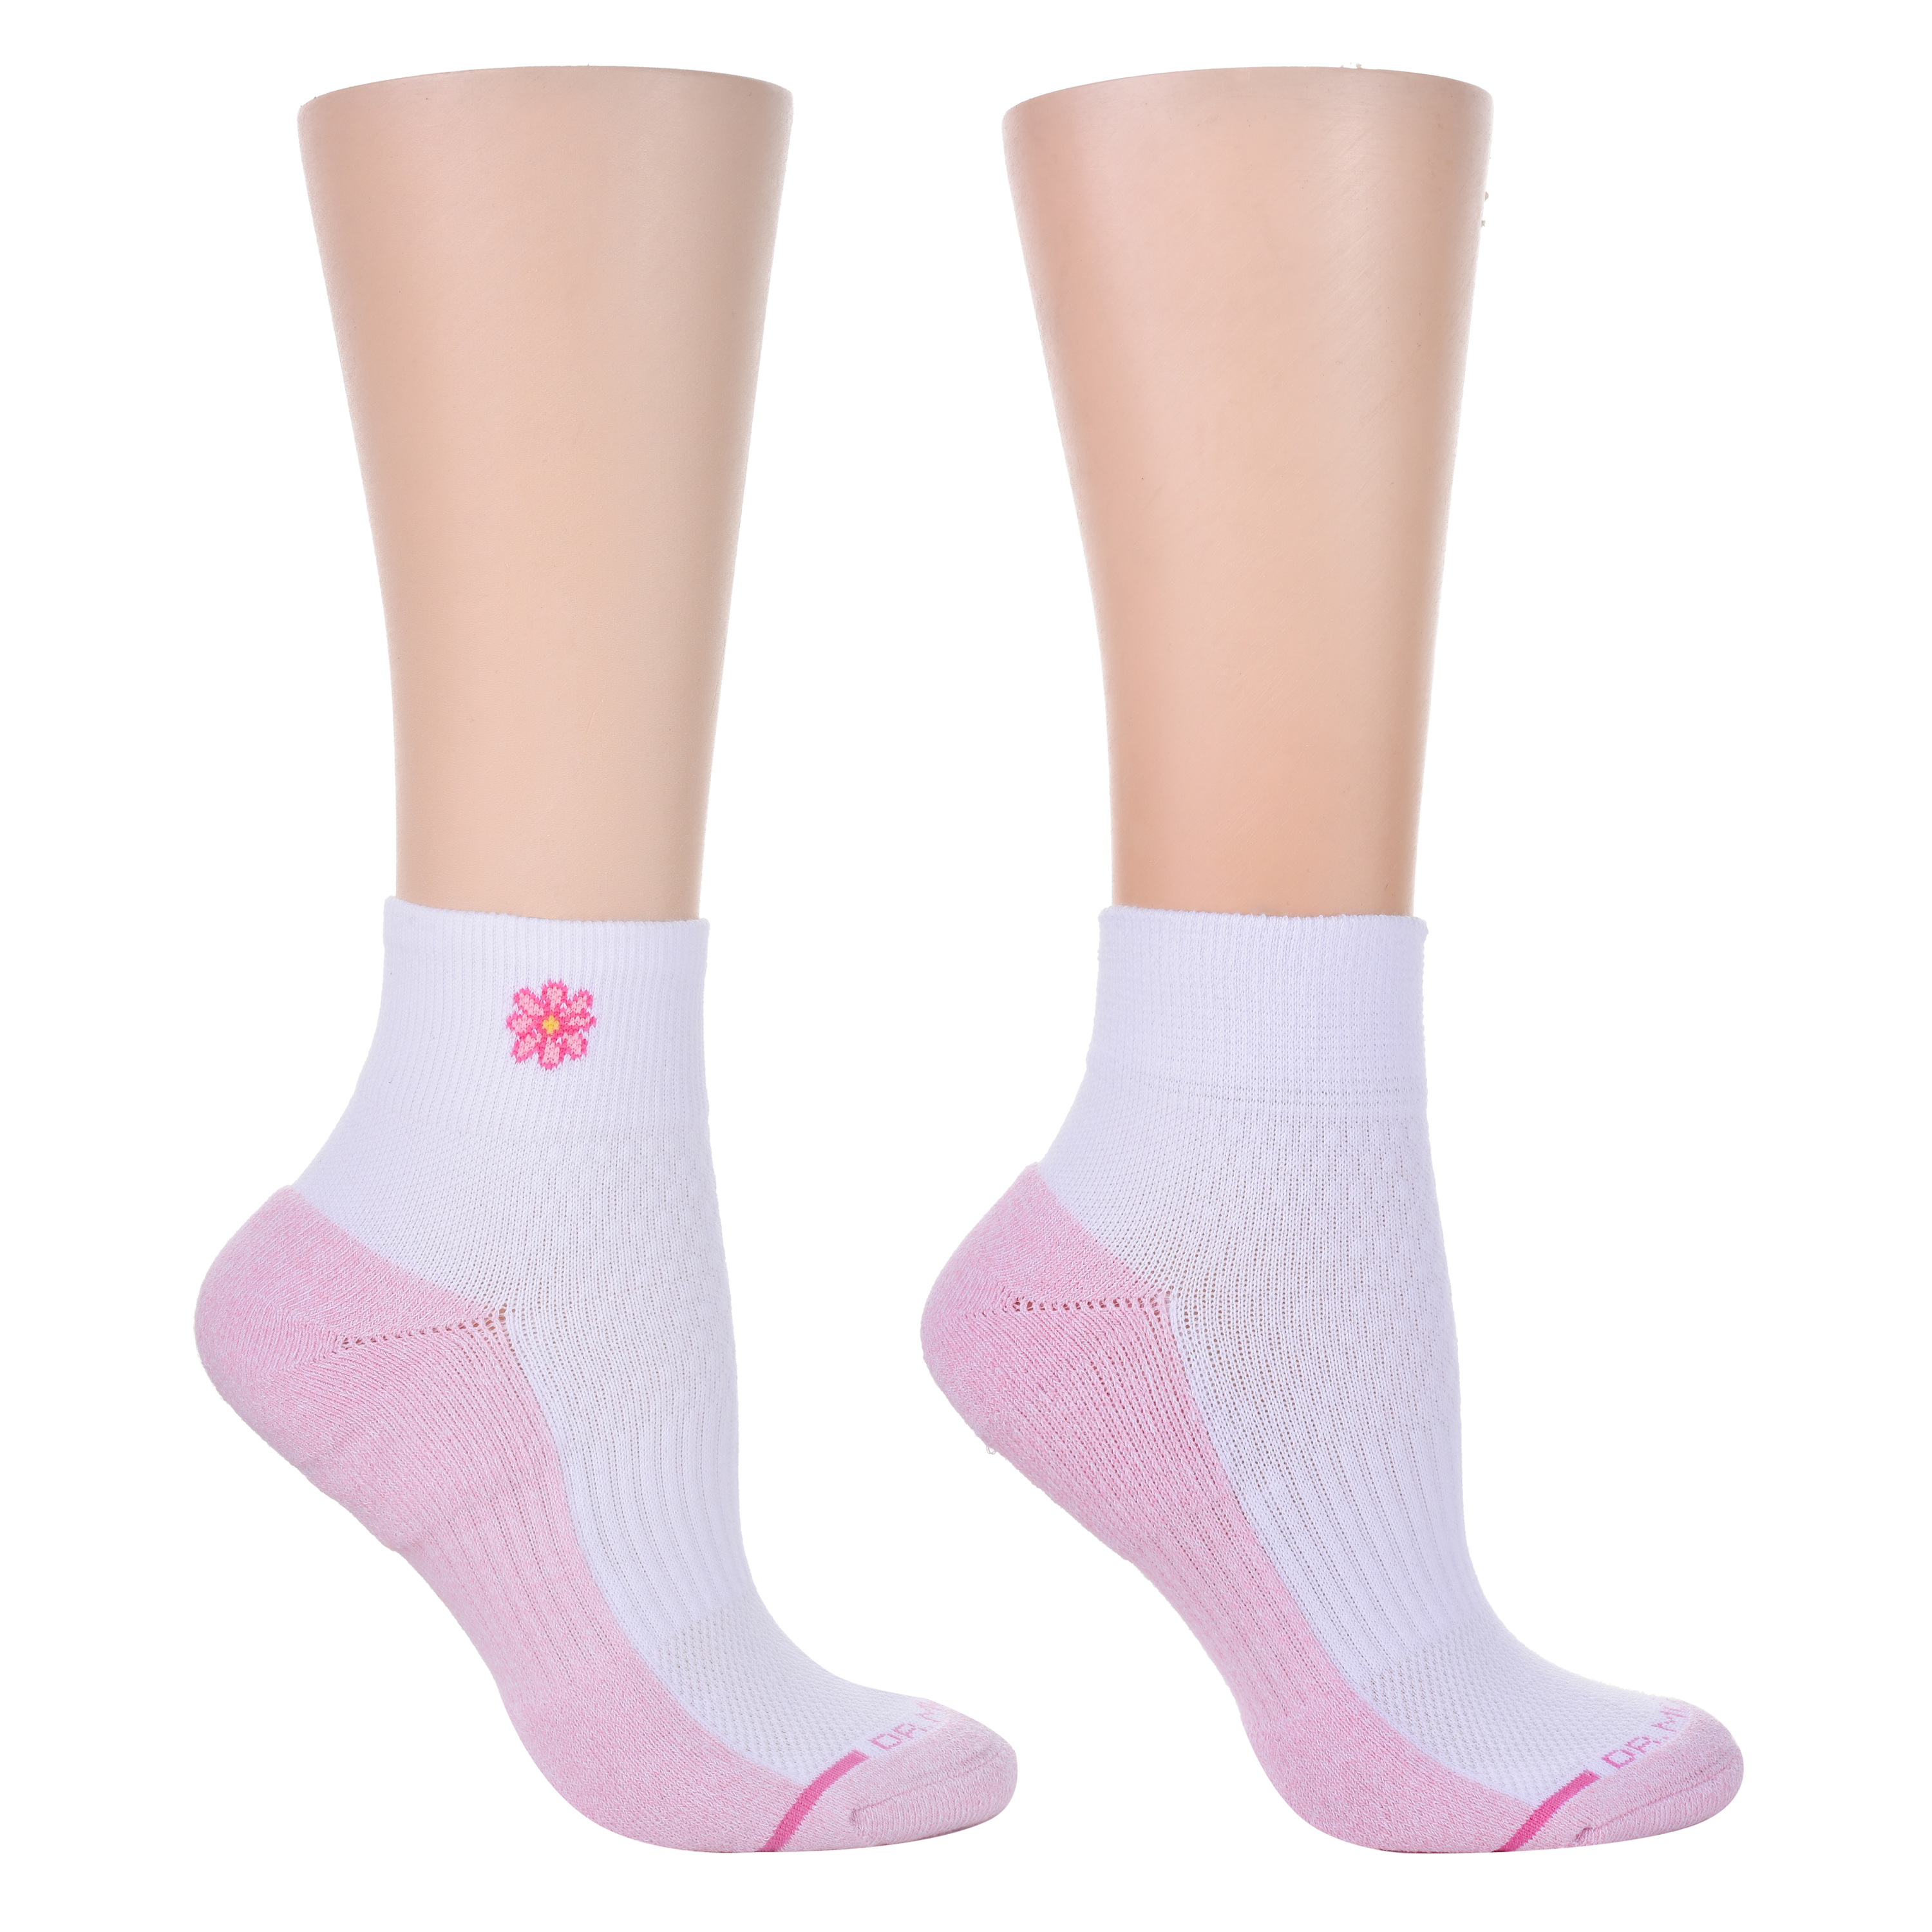 Daisy | Quarter Compression Socks For Women